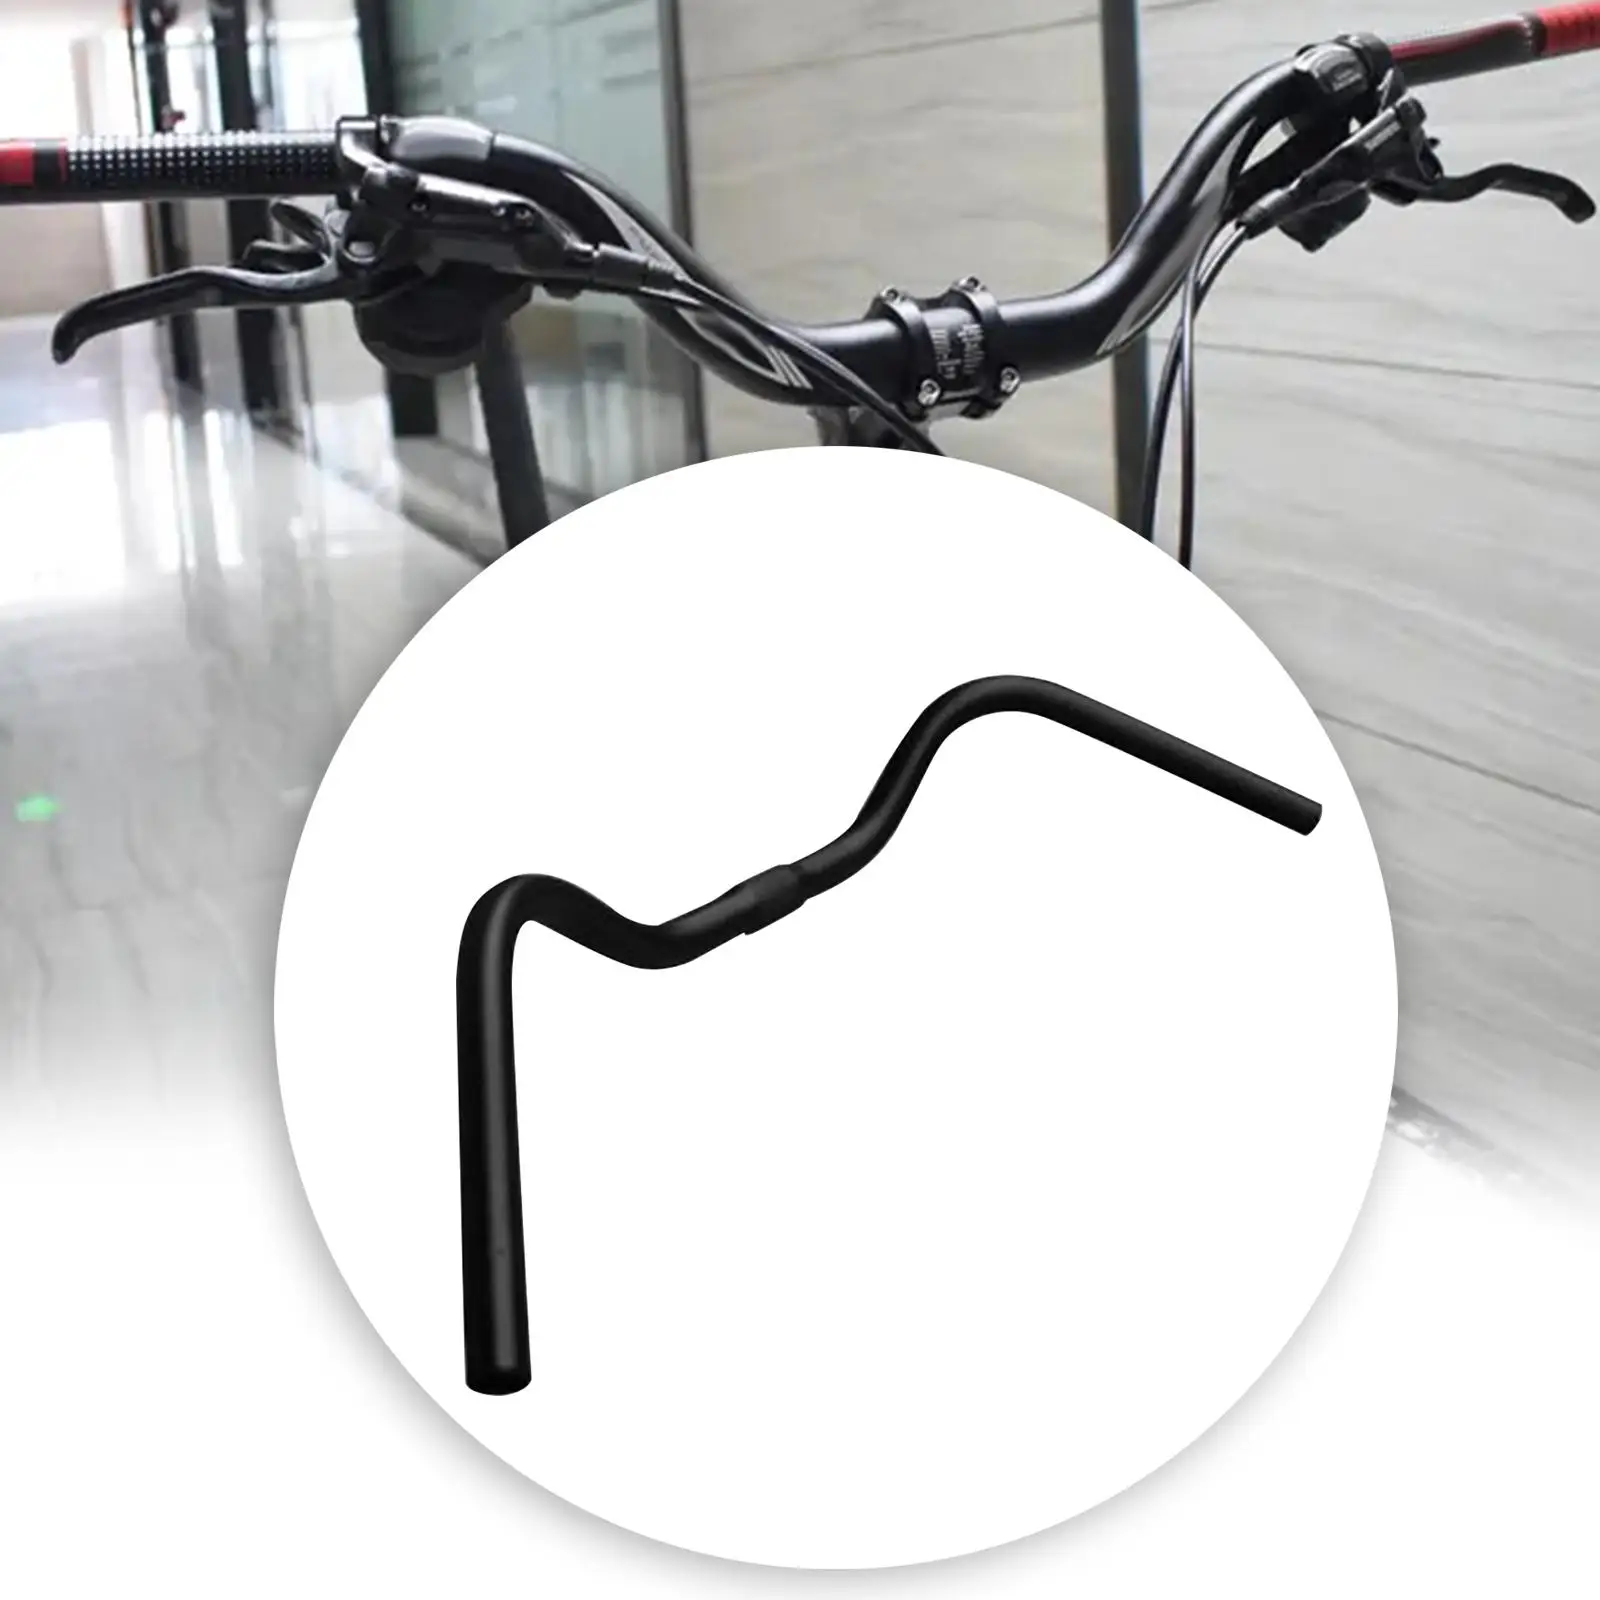 Bicycle Handlebars 25.4mm Clamp Premium Lightweight Bike Riser Handlebar for Mountain Road Bikes Outdoor Riding Accessories